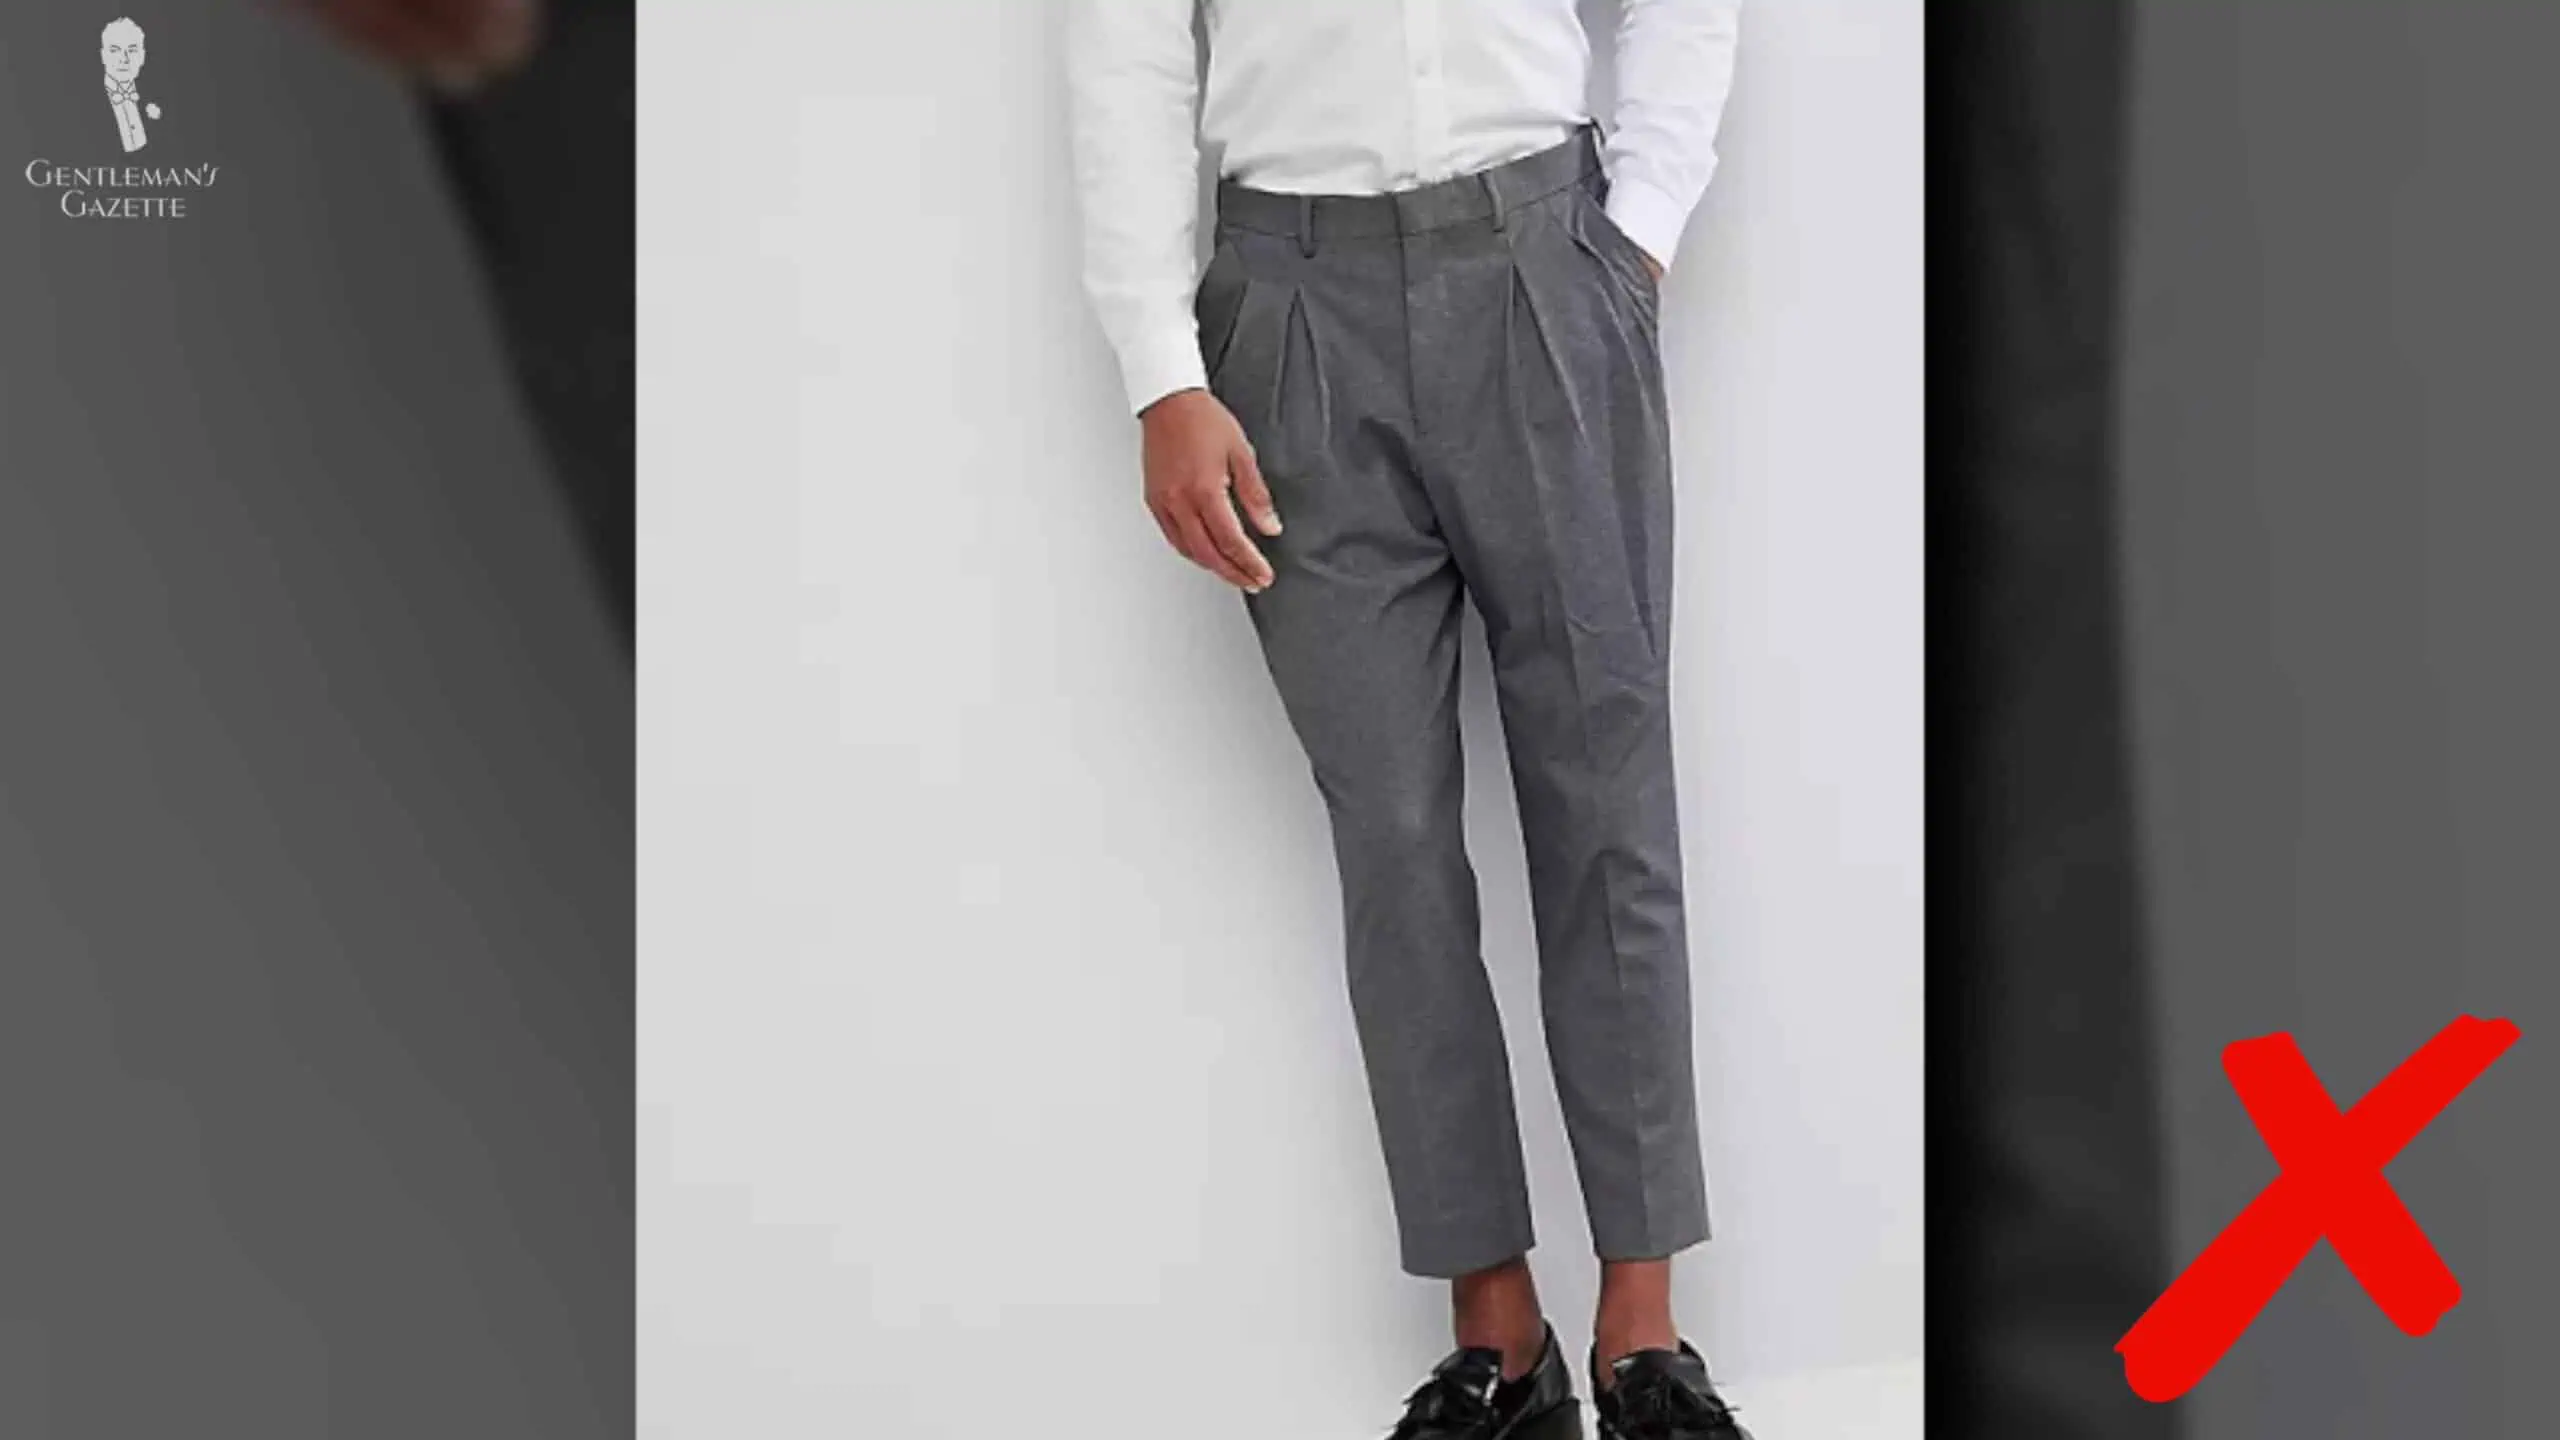 Stitched Crease Pants 10 Star Male Casual Formal Pants Soild Mens Suit Pants  Straight Leg Trousers - Walmart.com